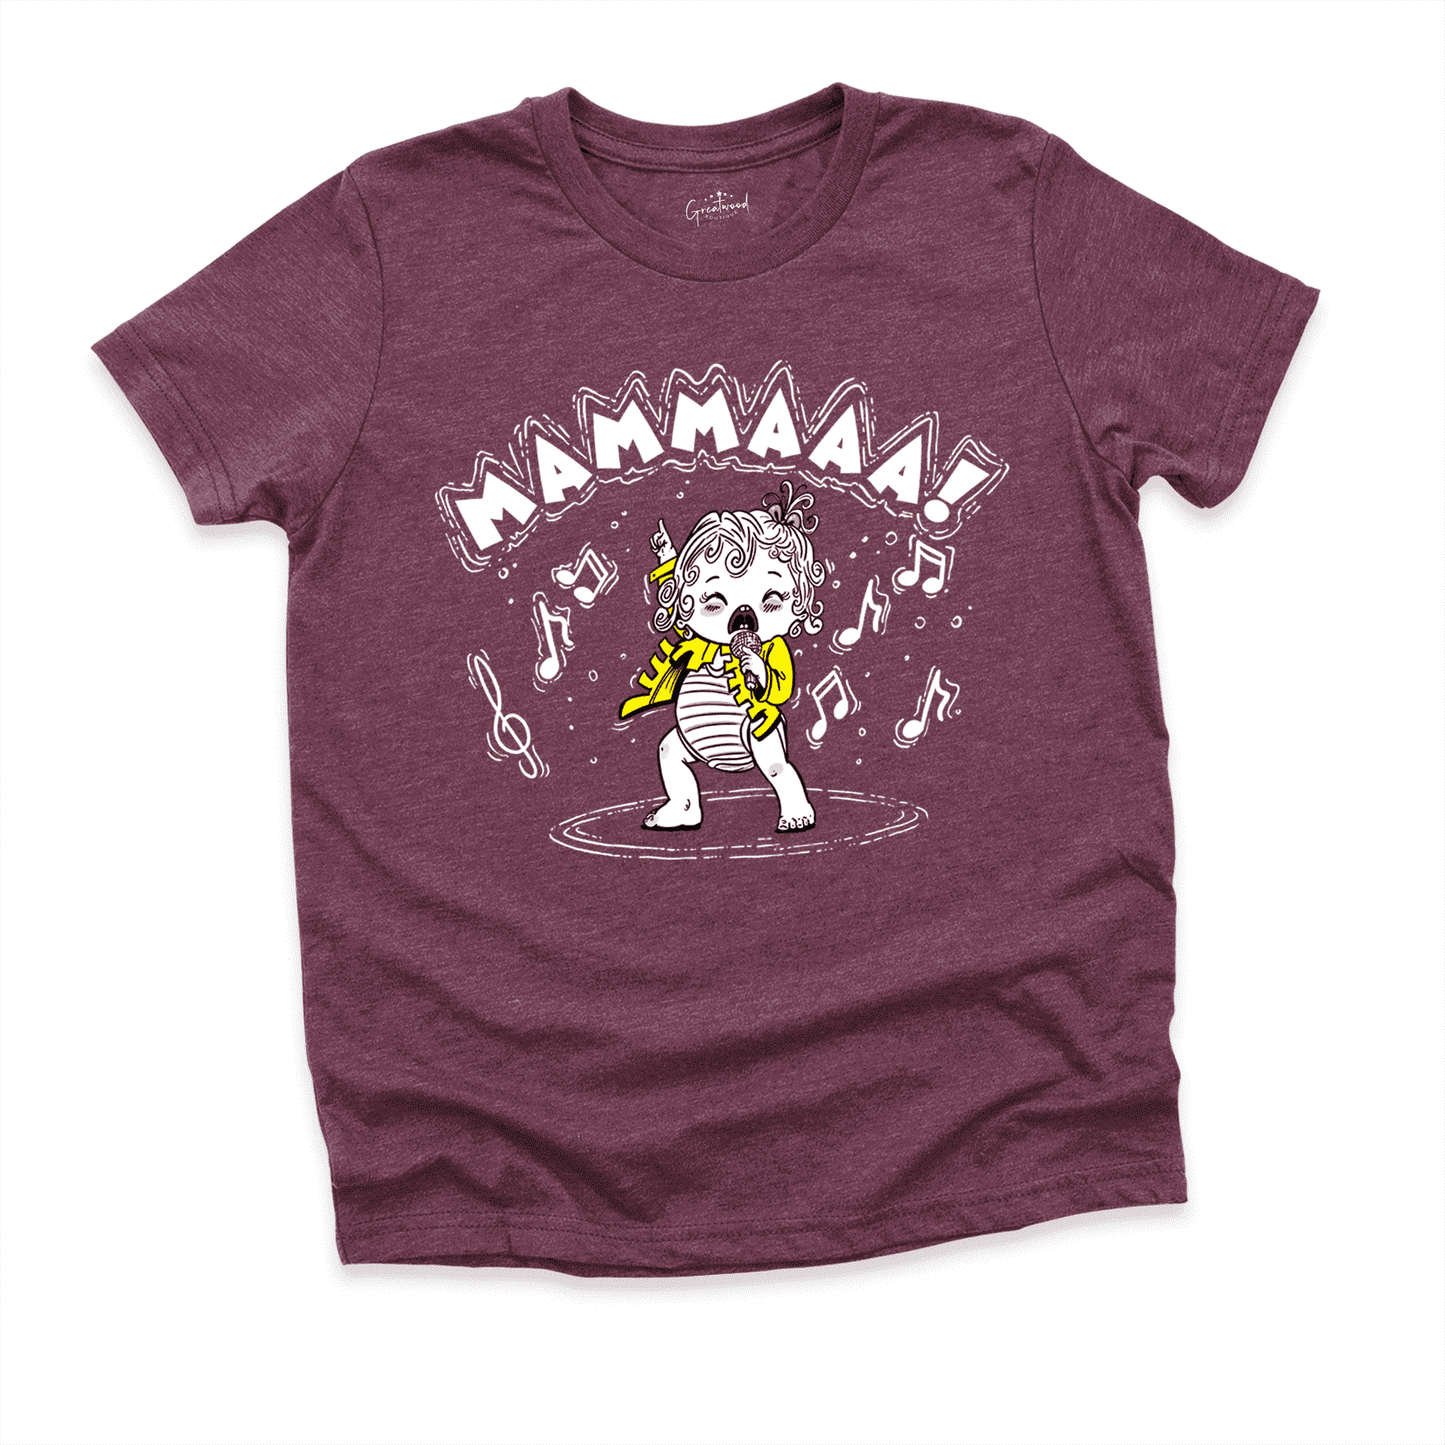 Mammaaa Youth Shirt Maroon - Greatwood Boutique